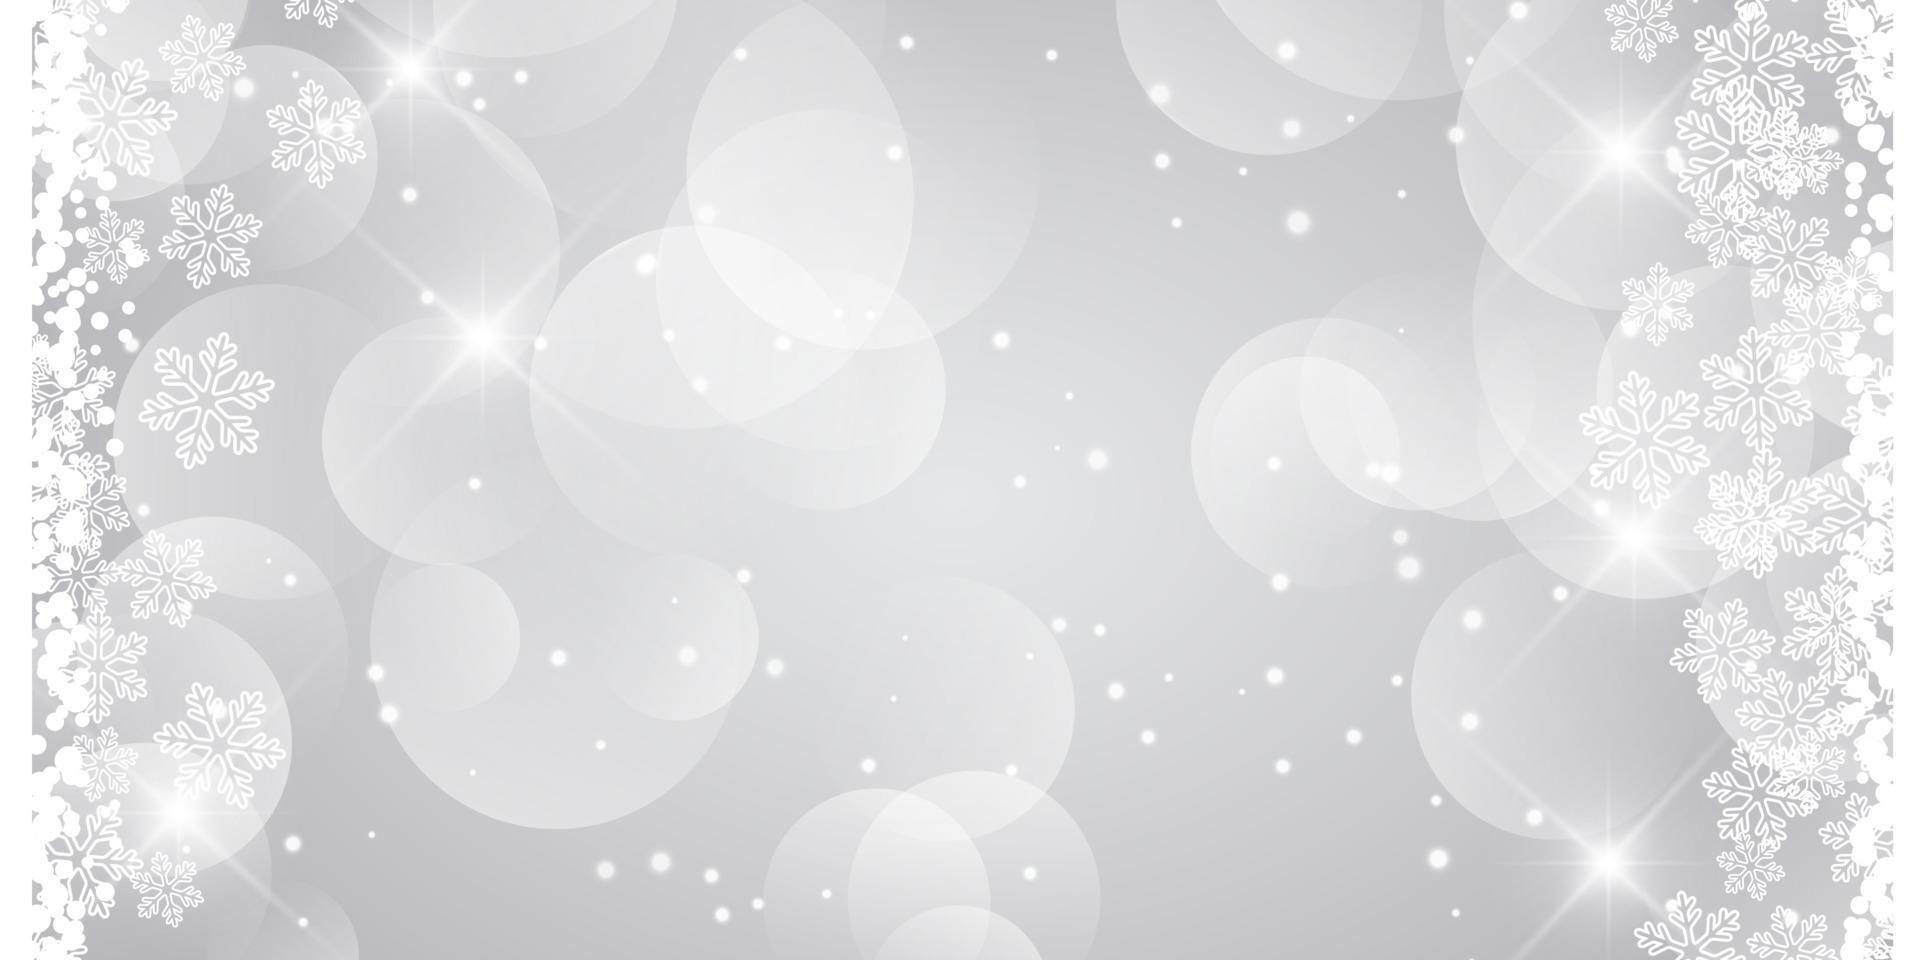 silver- jul baner design med snöflingor vektor